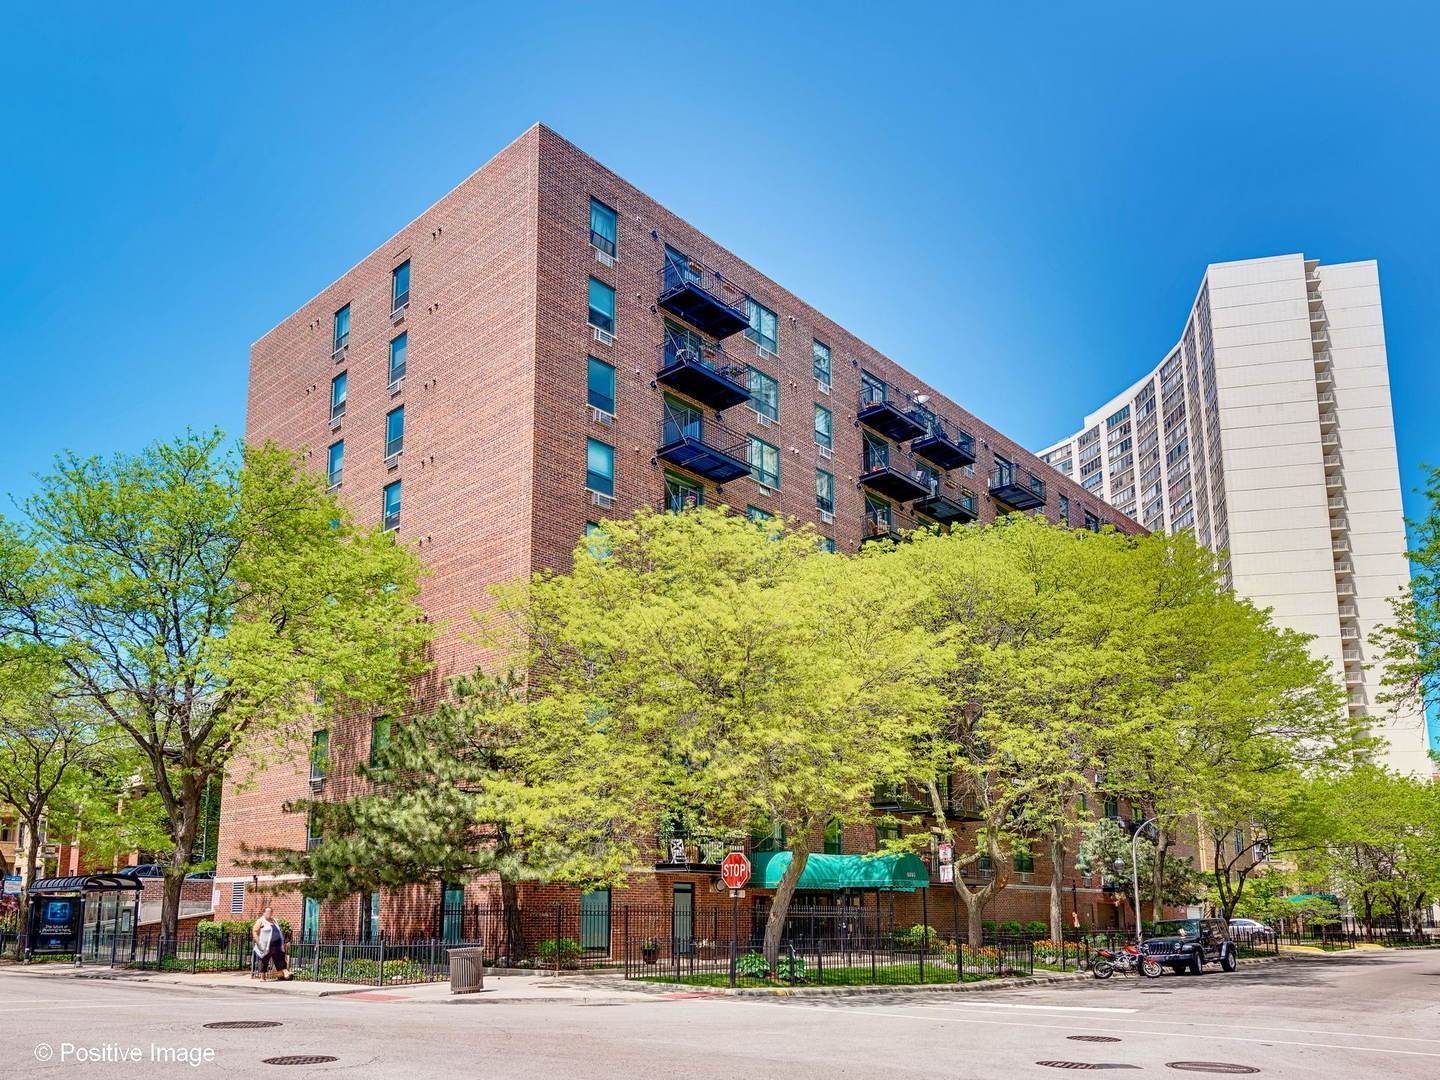 Condominium at Lake View East, Chicago, IL 60613